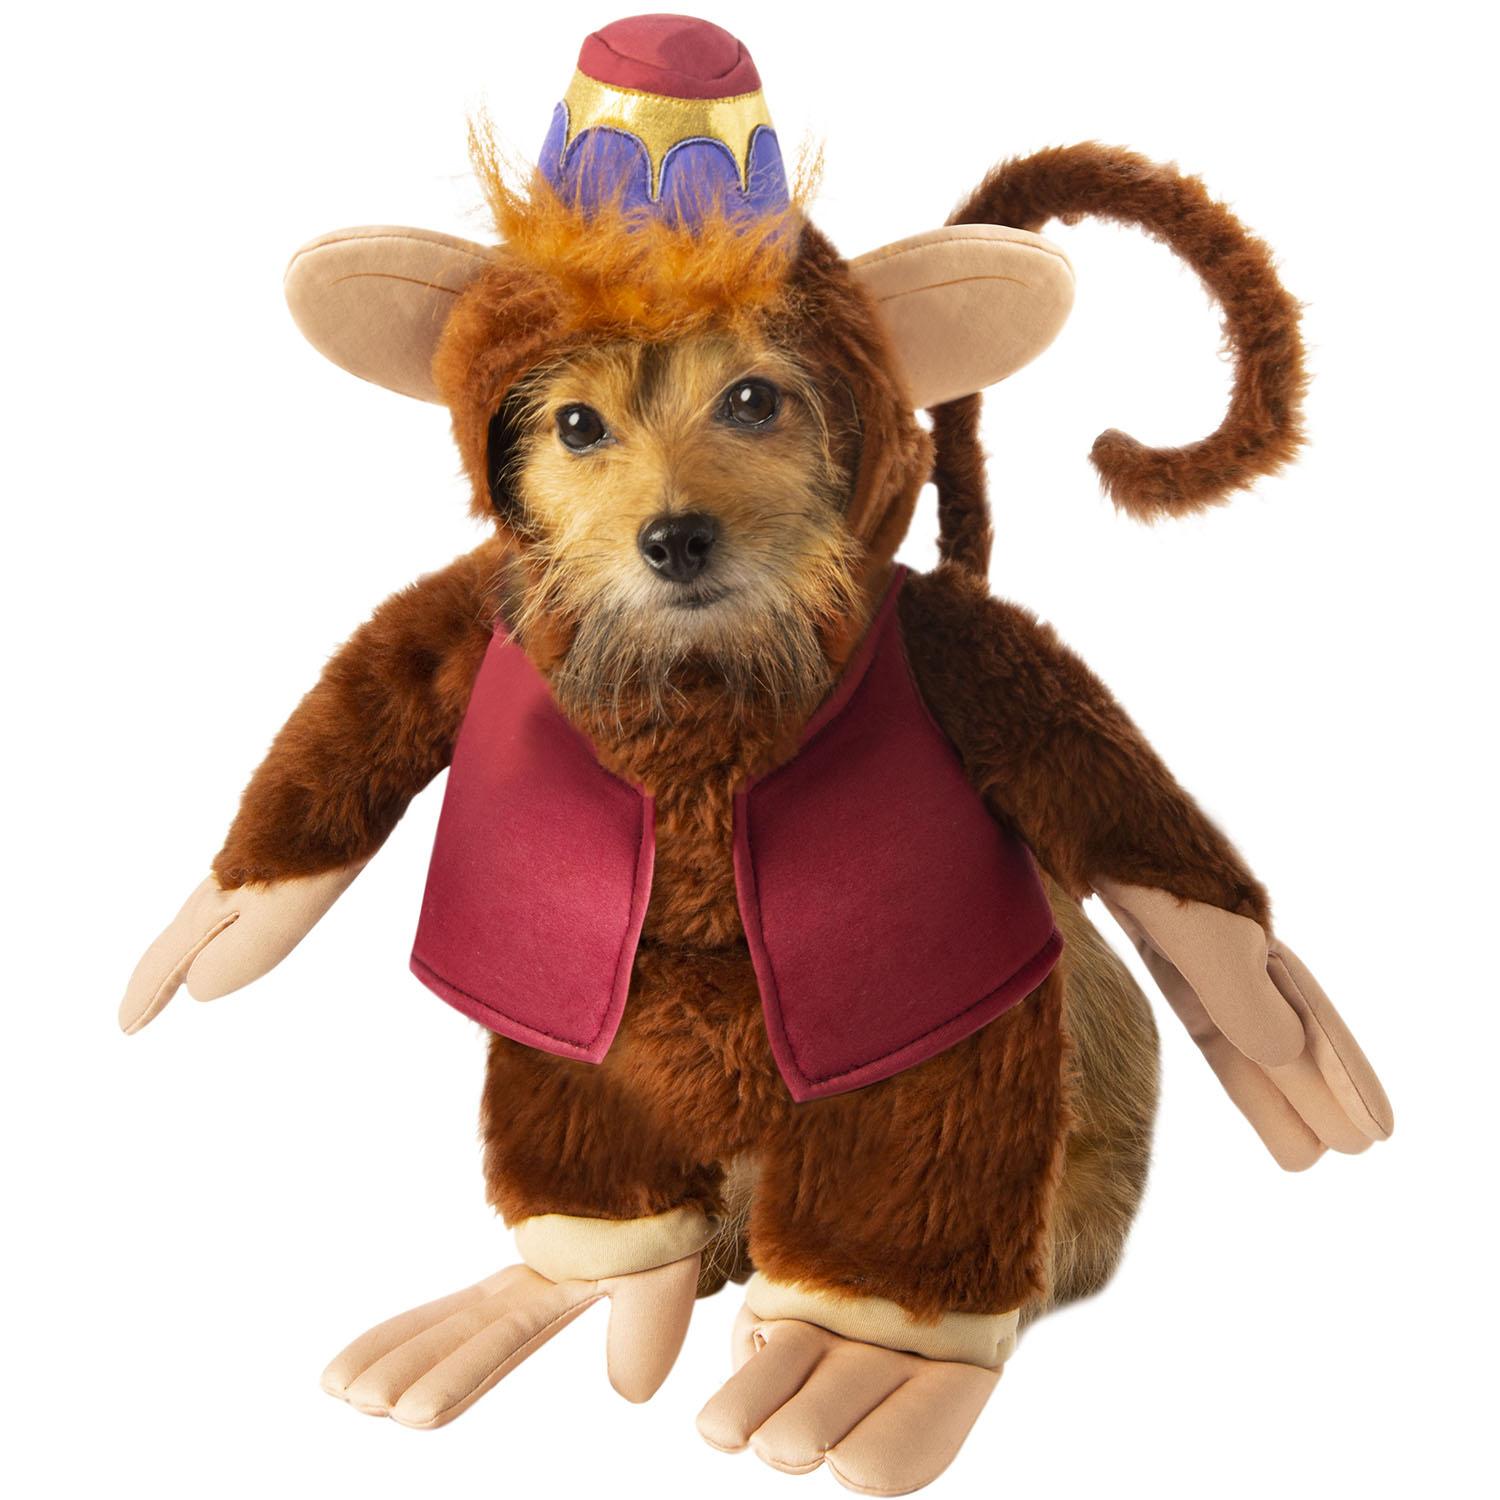 Walking Abu Monkey Dog Costume from Disney's Aladdin